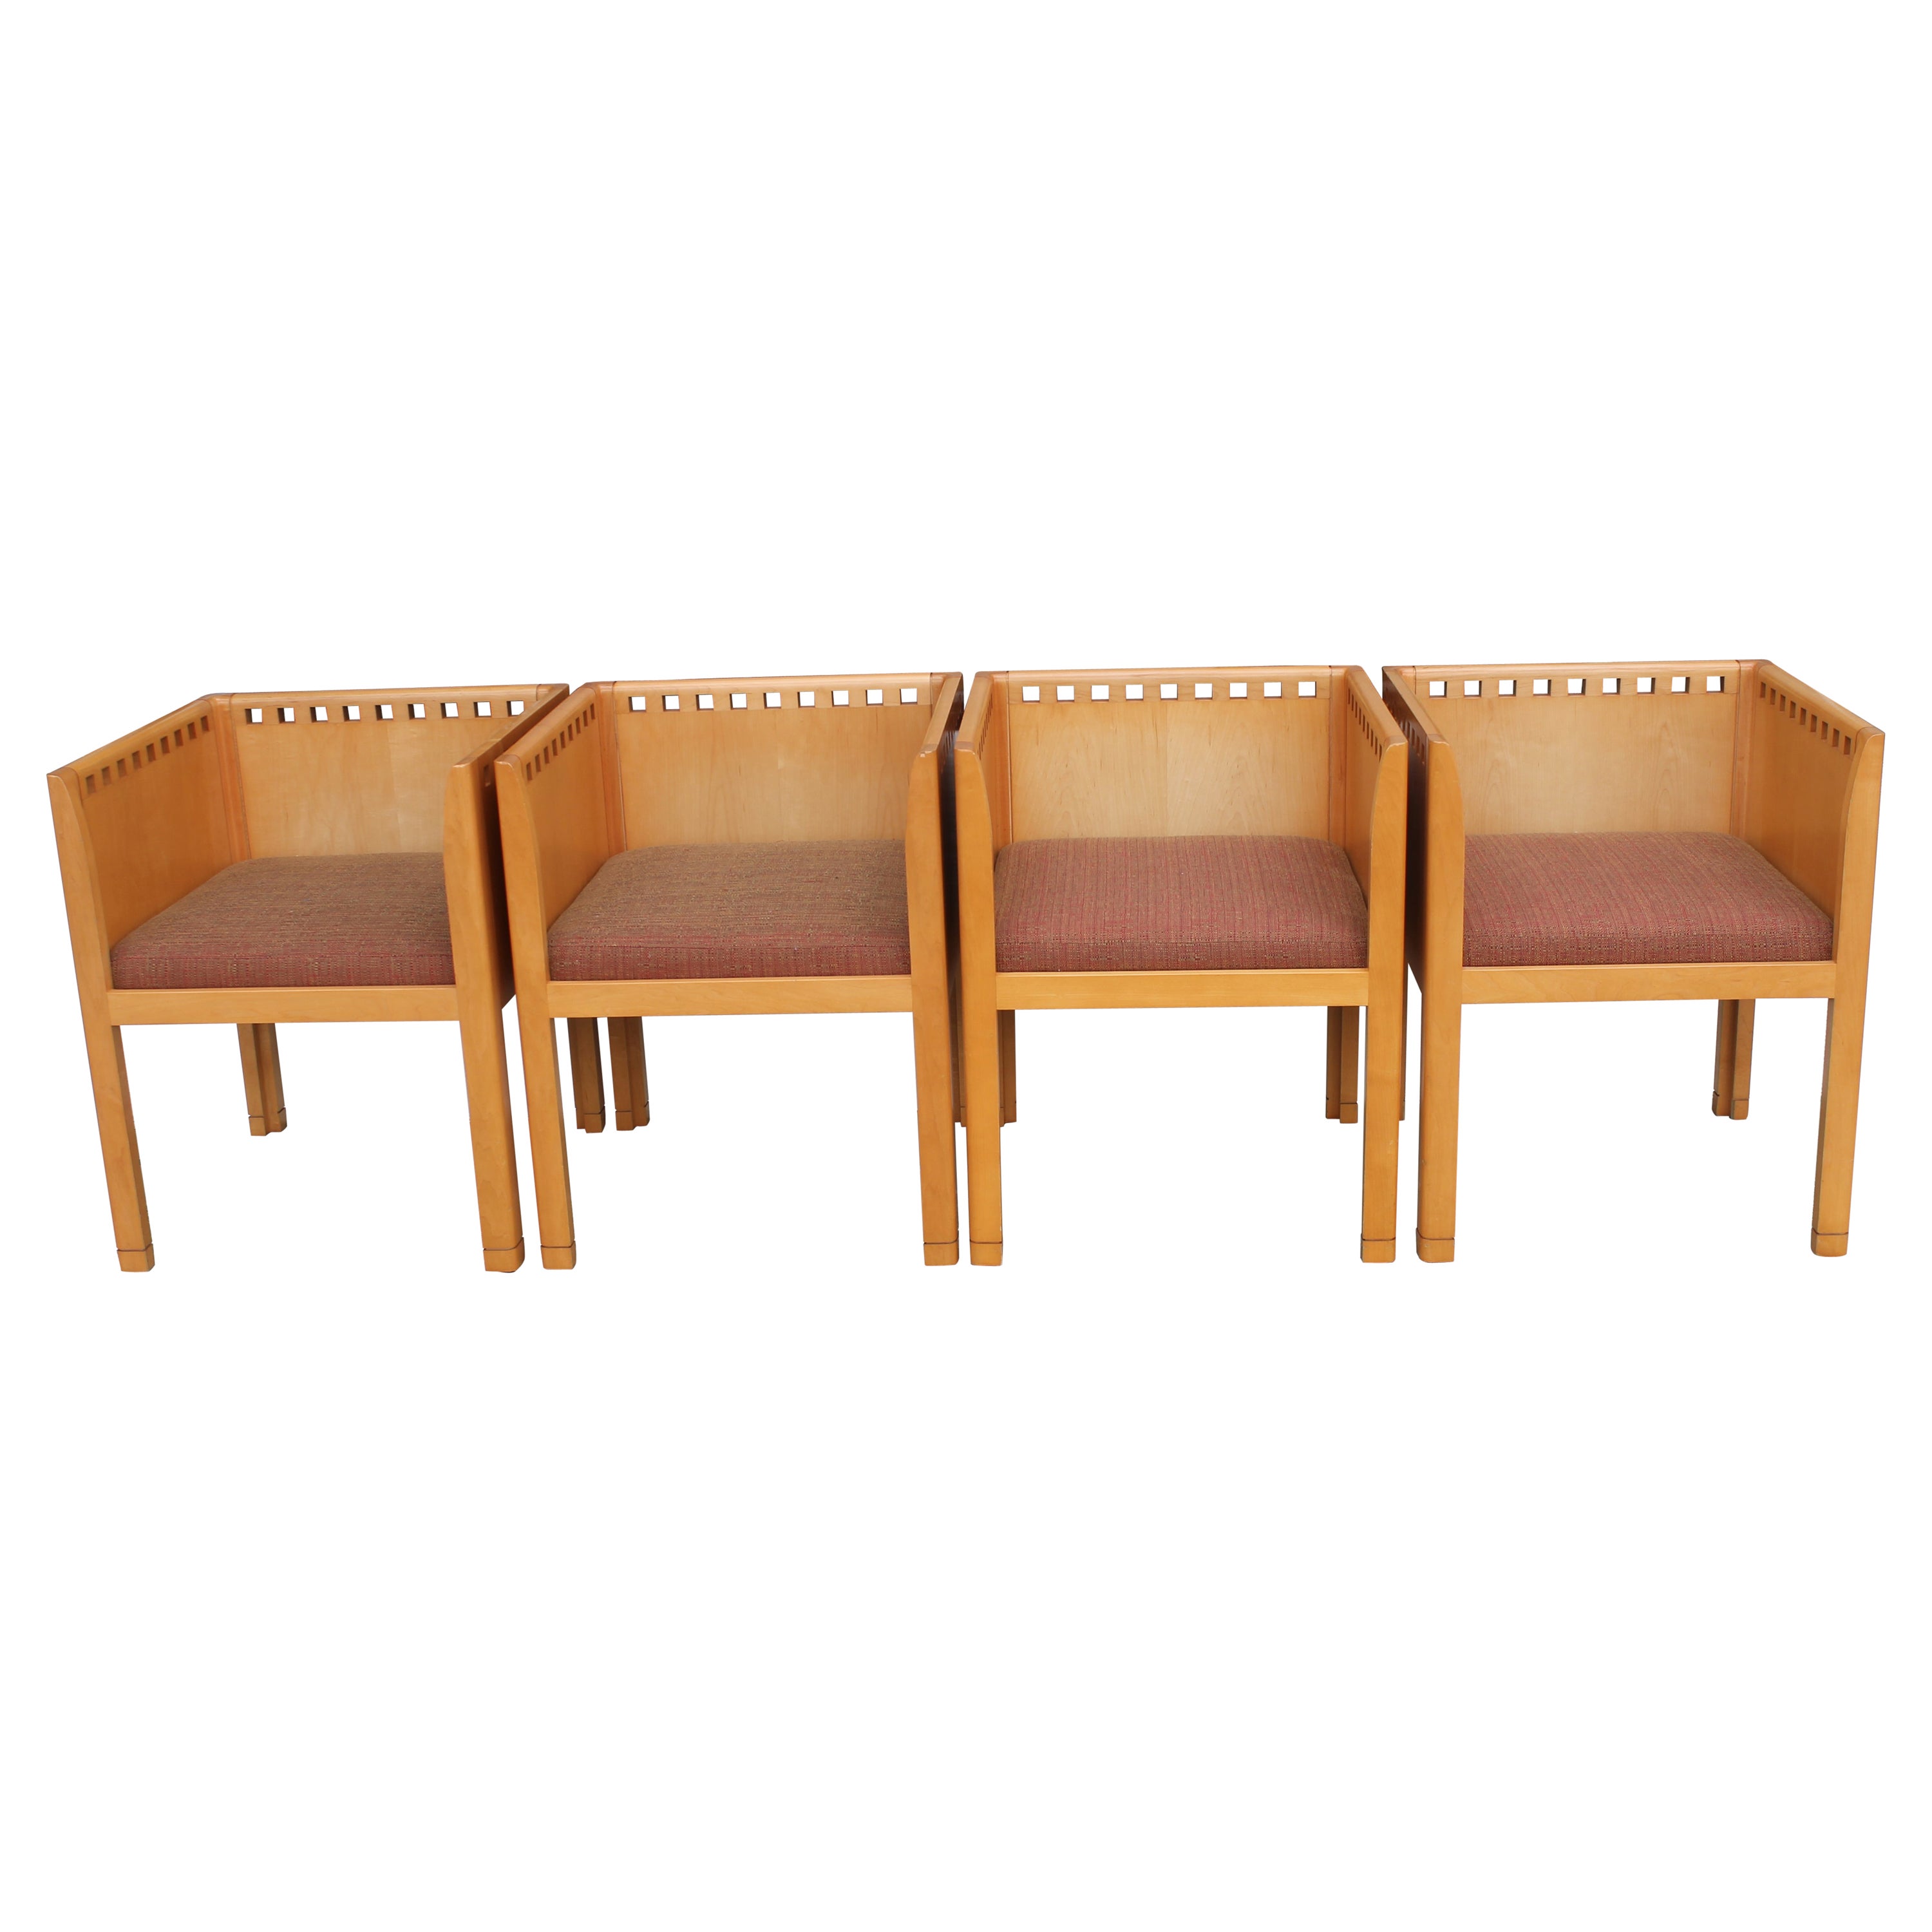 Four Chairs, Metropolitan Furniture Corporation